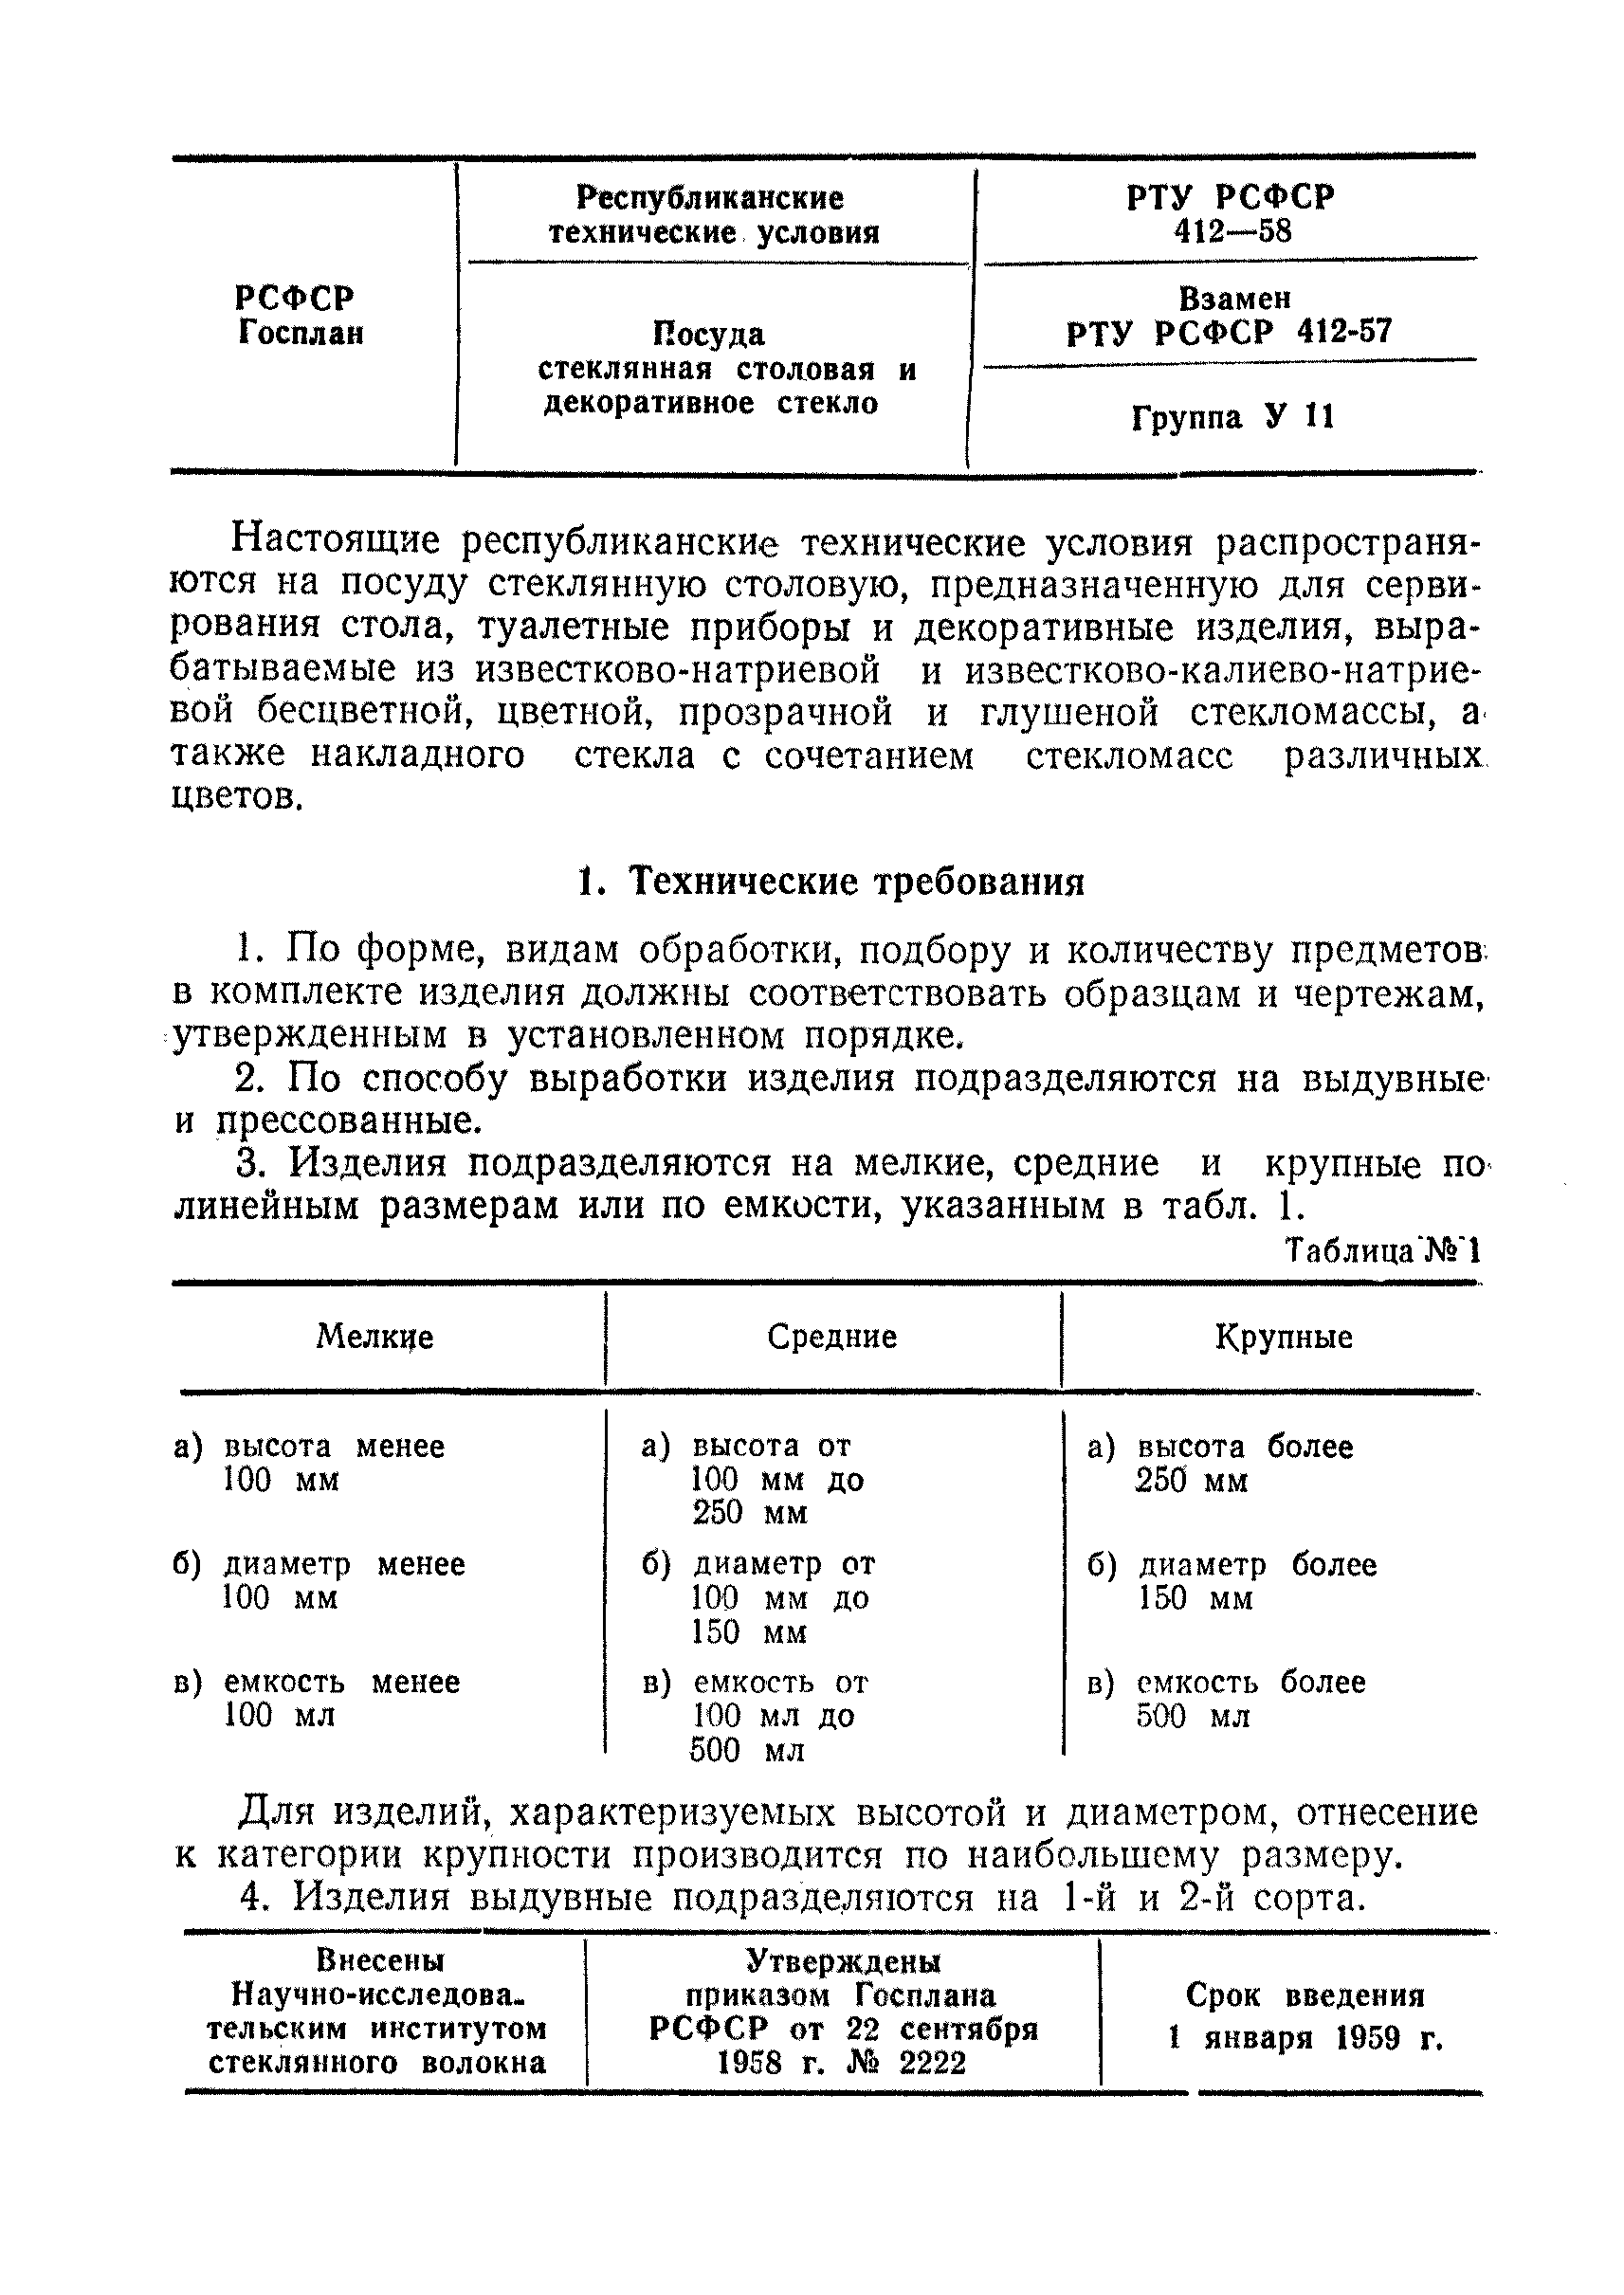 РТУ РСФСР 412-58